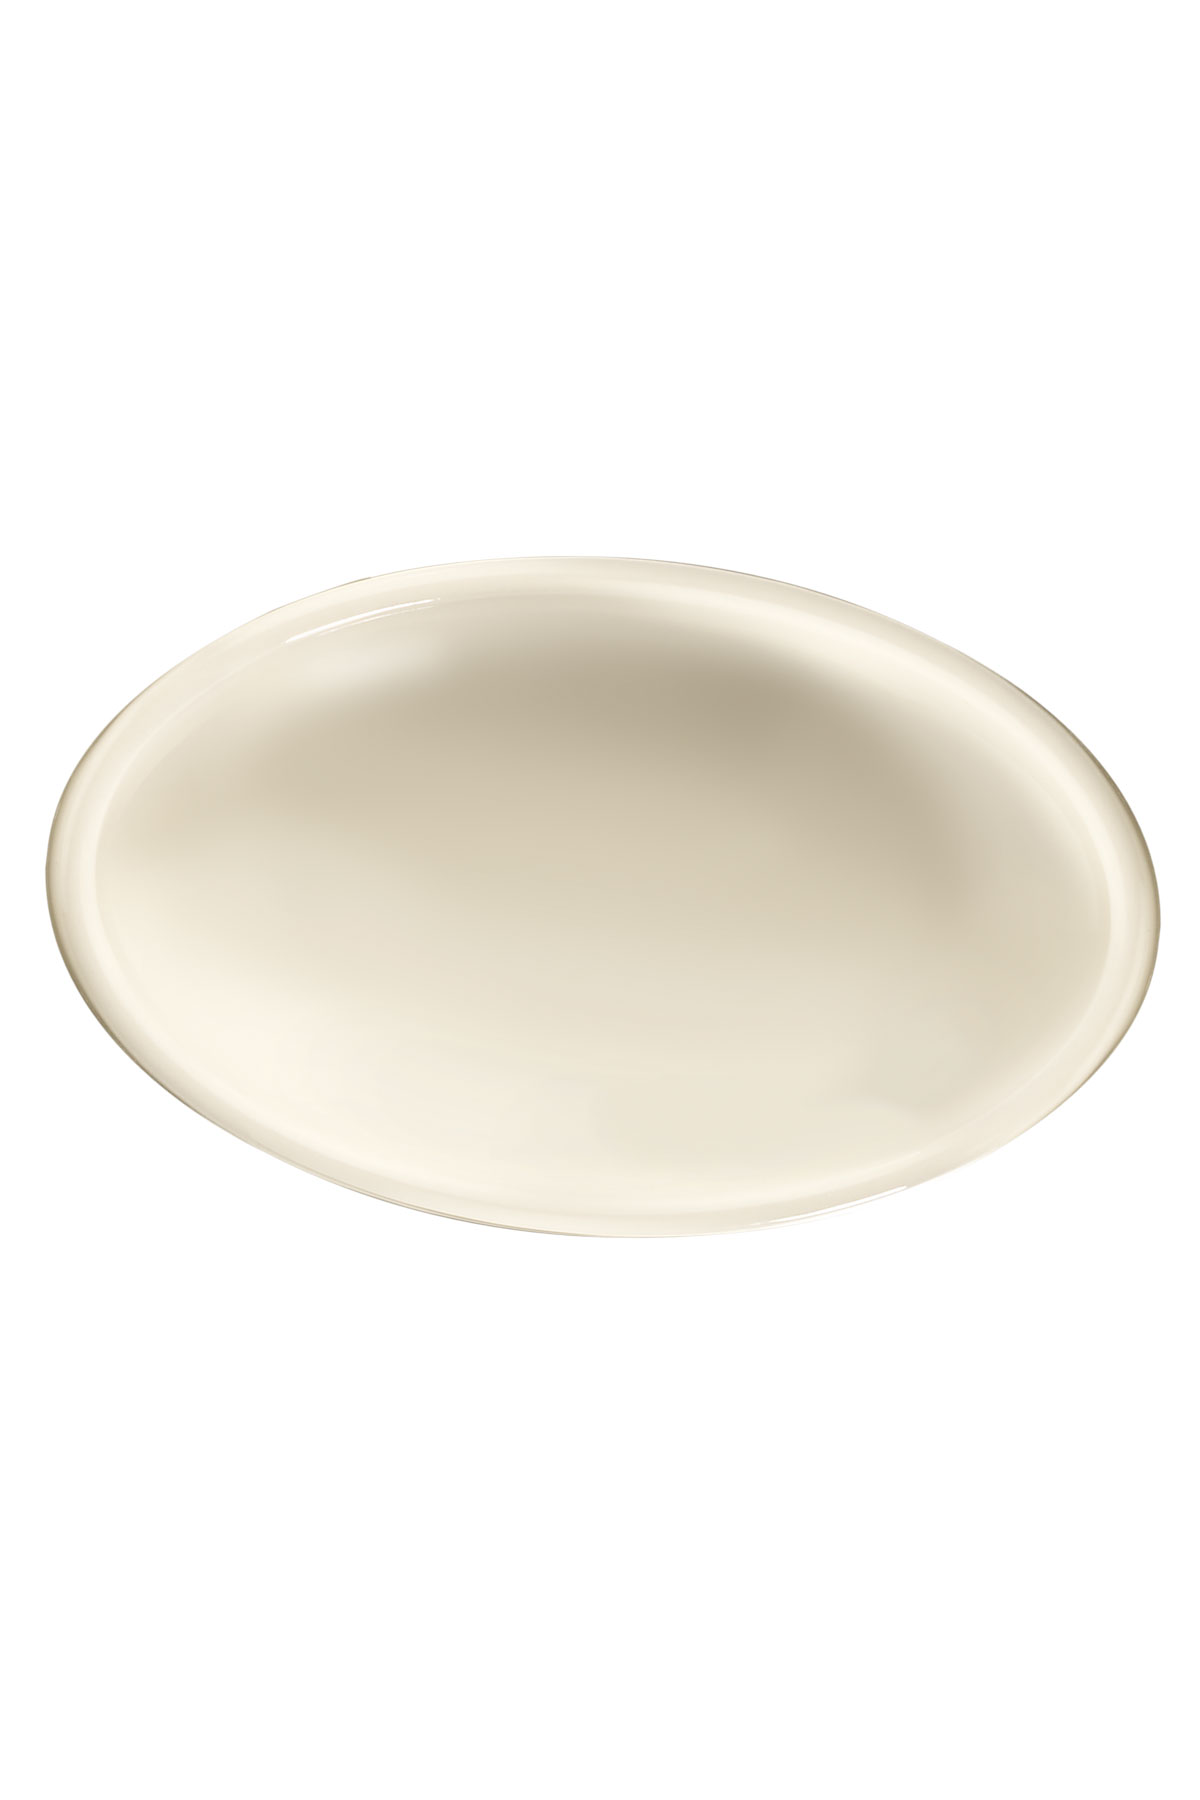 Kütahya Porselen Chef Taste Of 17 cm Oval Kase Krem - 1